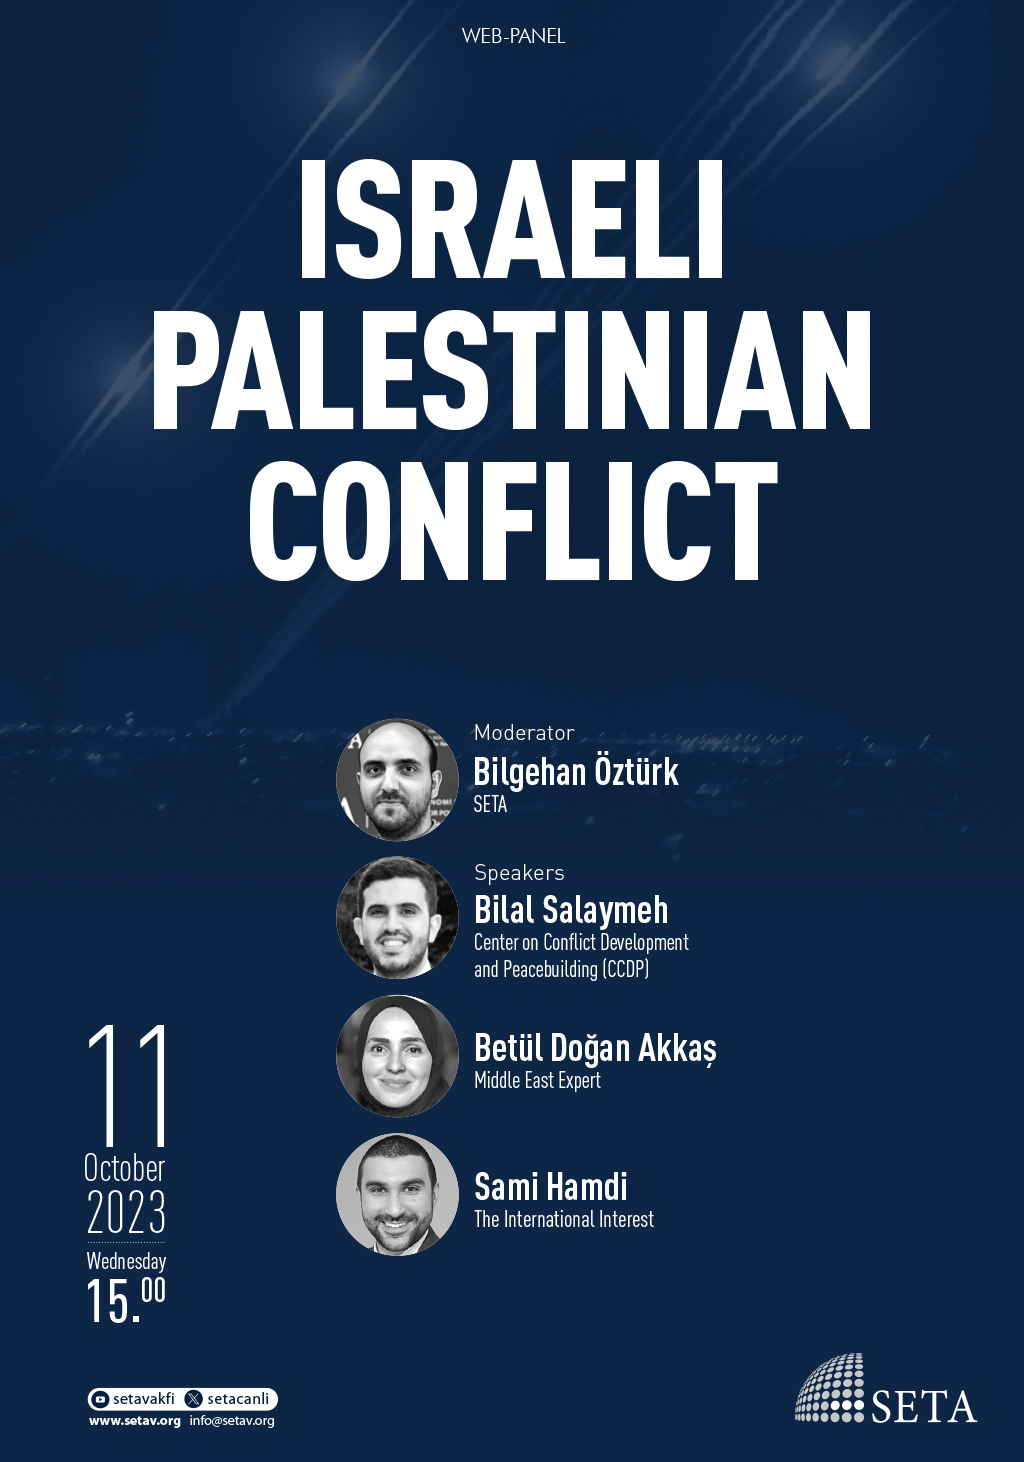 Web Panel: Israeli Palestinian Conflict